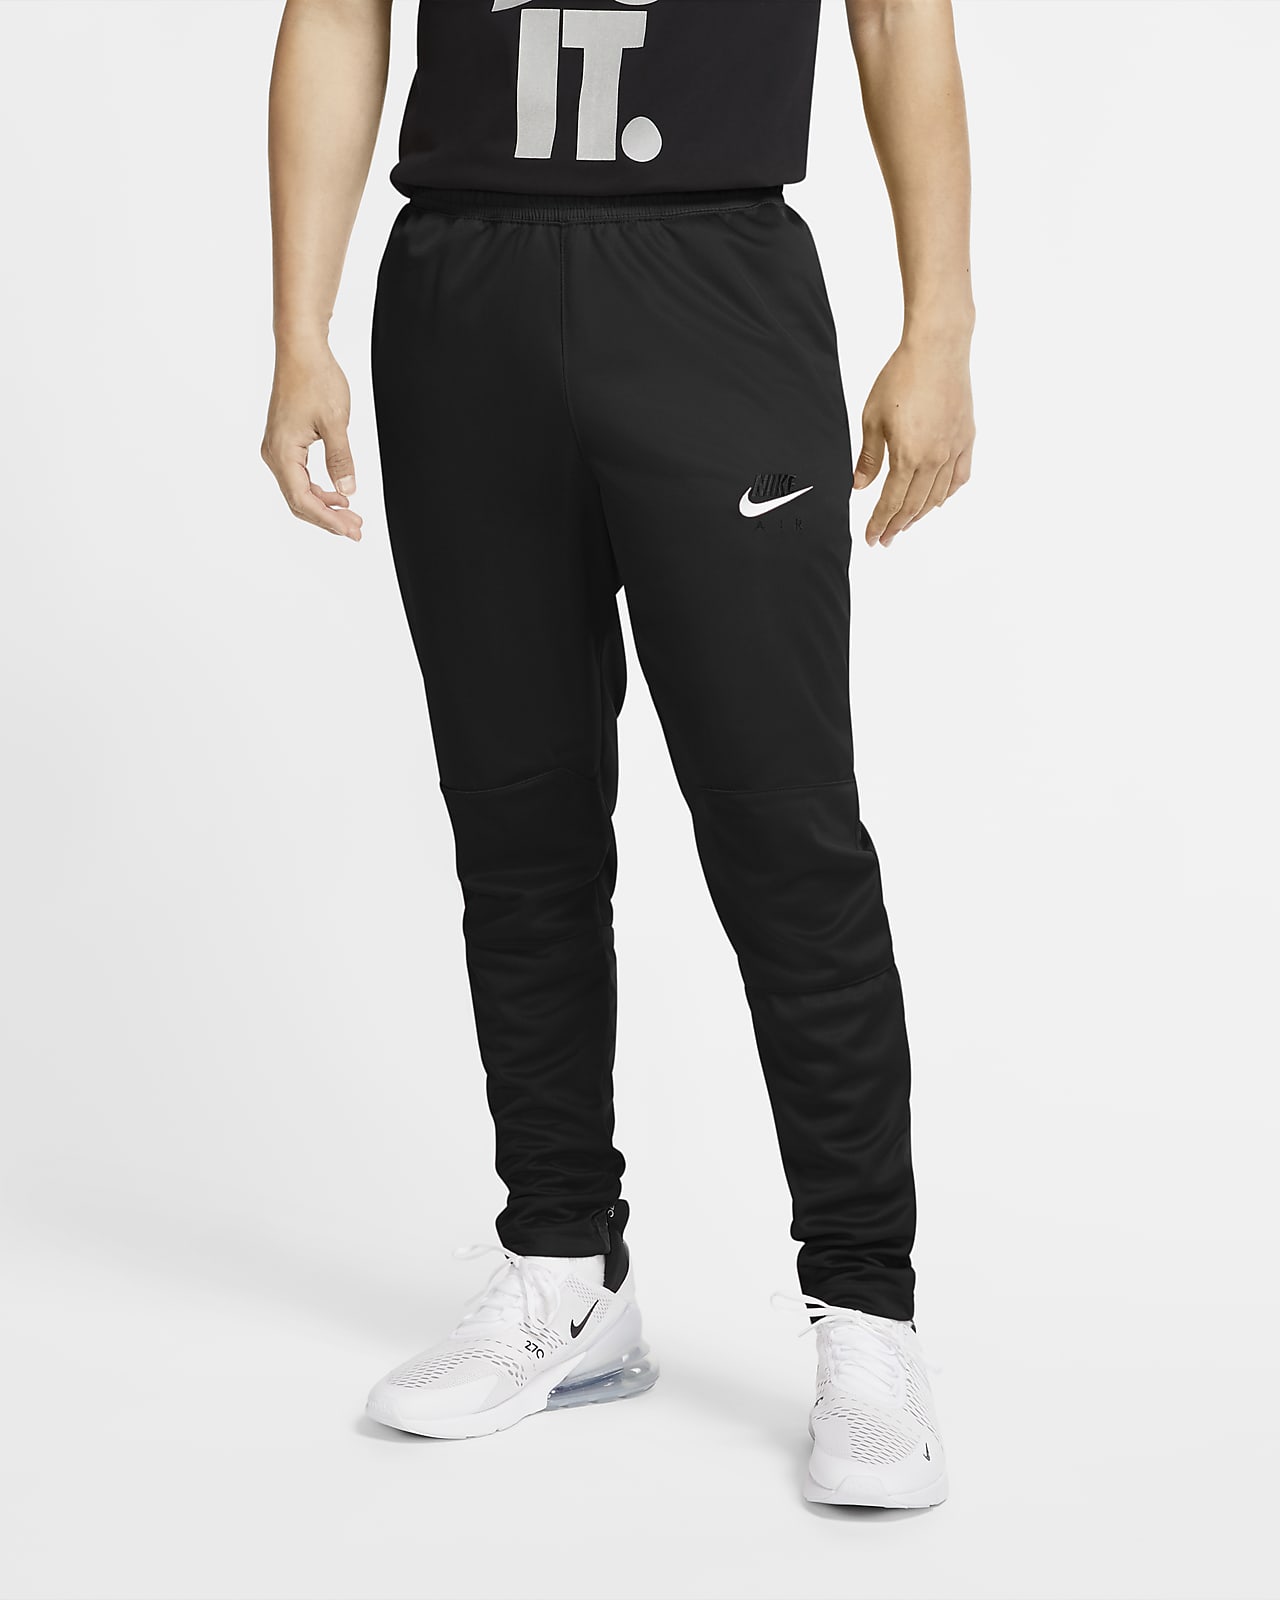 Nike Air Men's Trousers. Nike EG